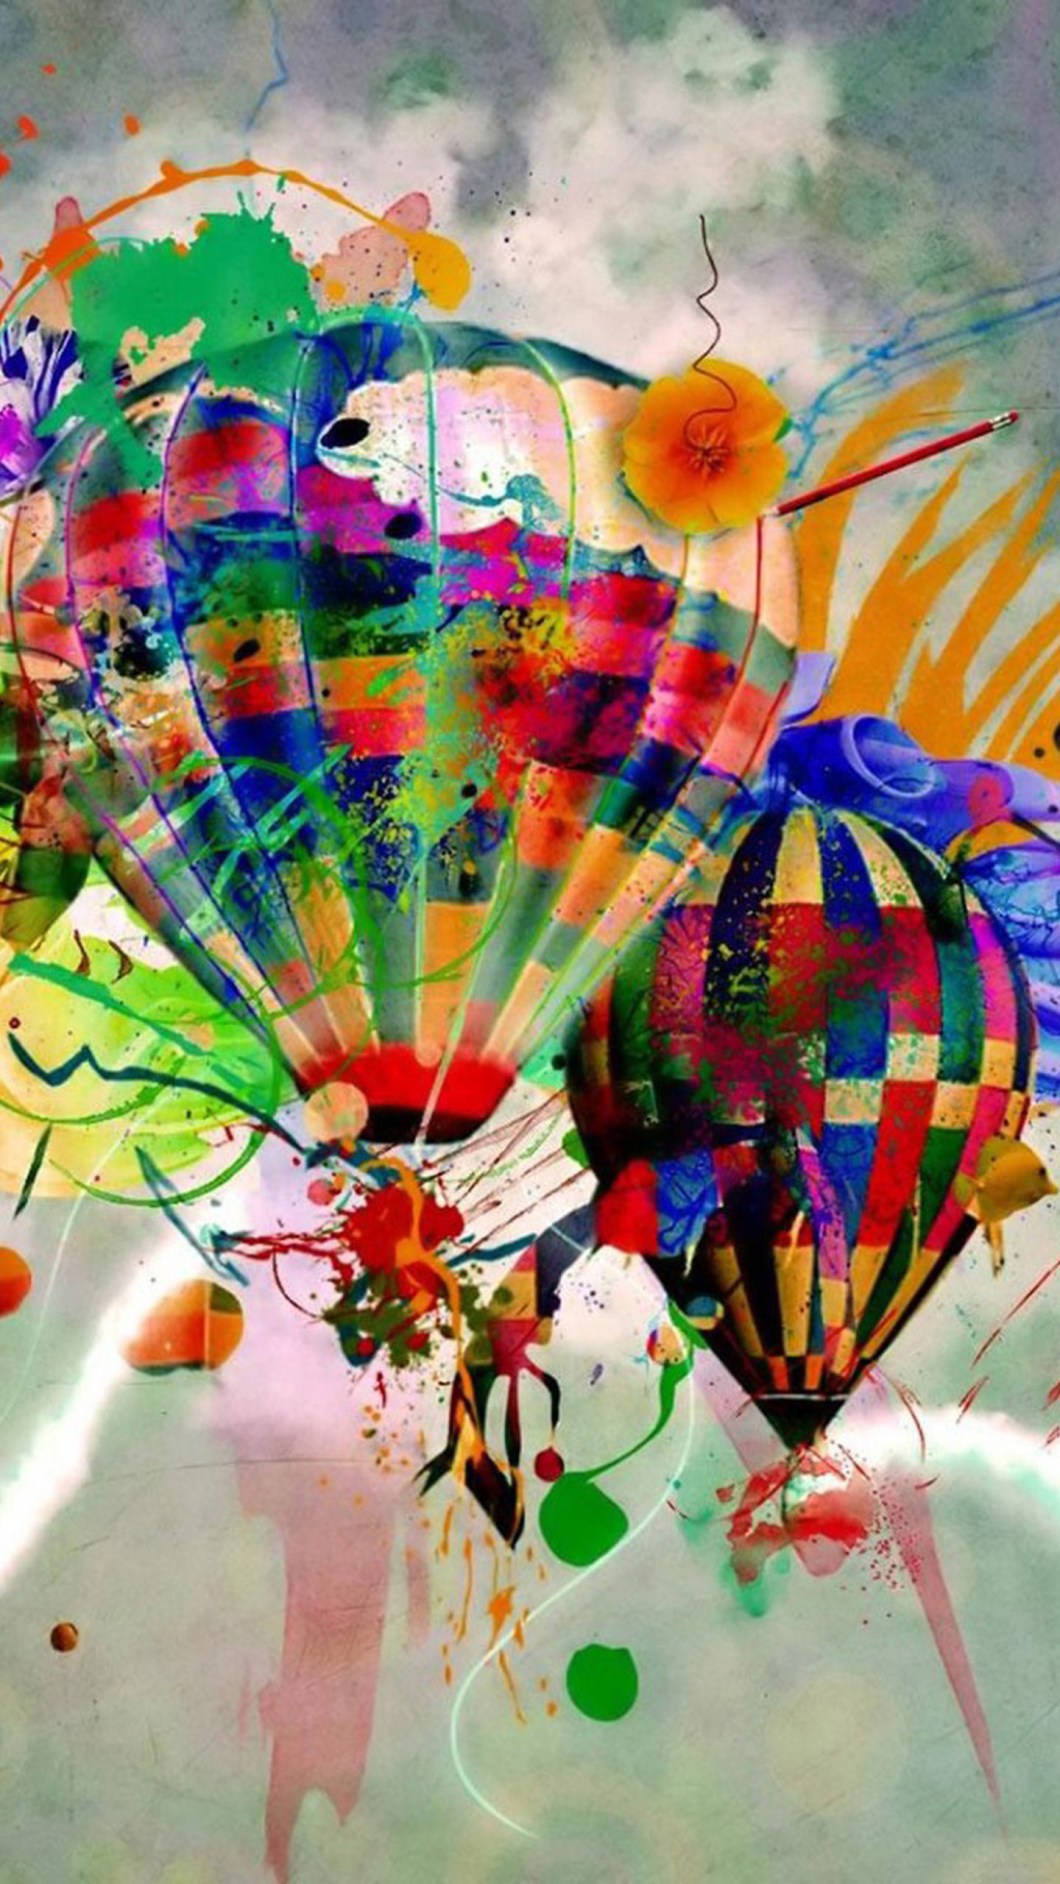 Lg G4 Wallpaper Hd - Hot Air Balloon Graffiti - HD Wallpaper 